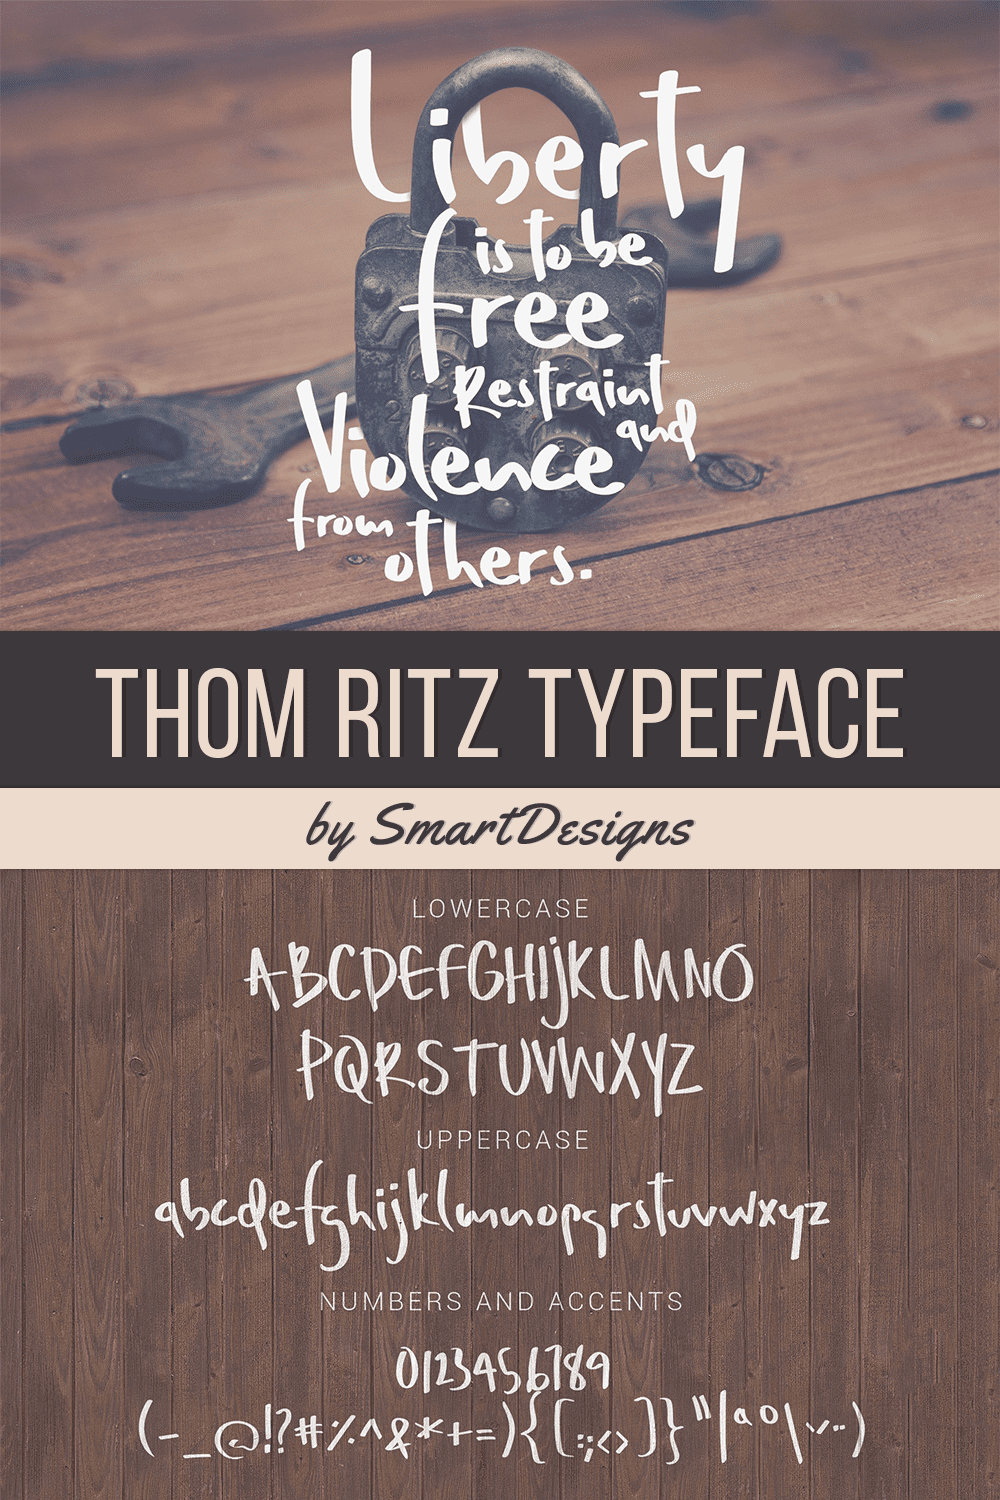 Thom ritz typeface of pinterest.